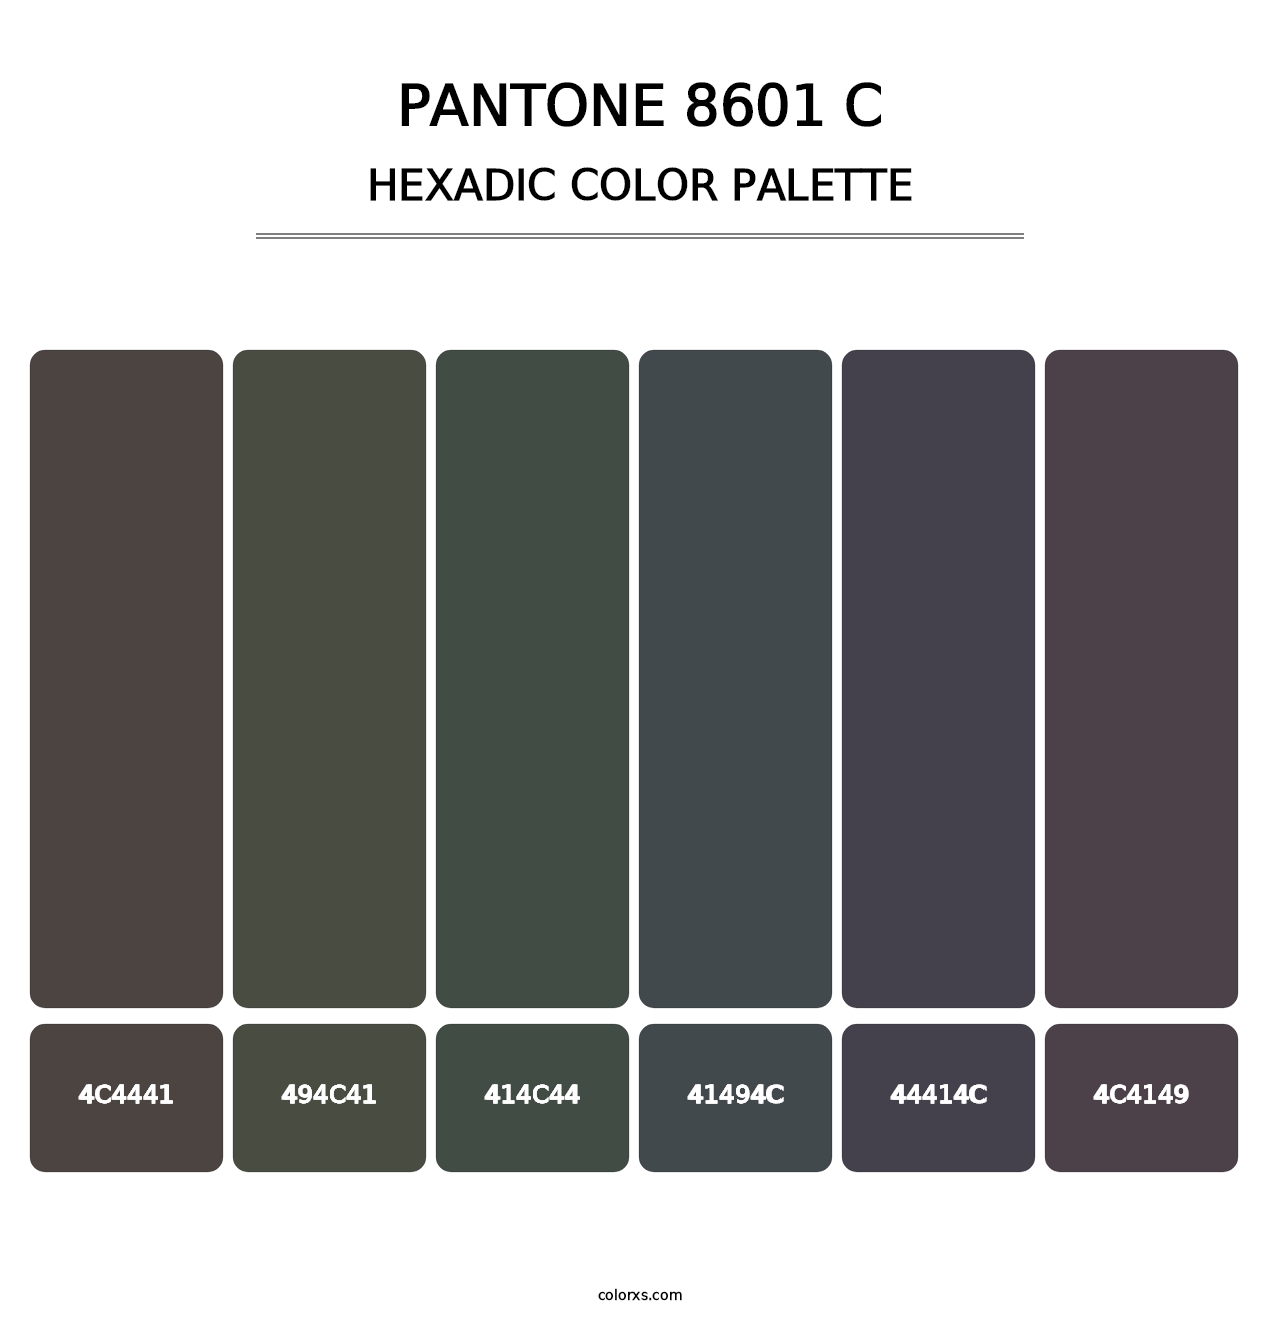 PANTONE 8601 C - Hexadic Color Palette